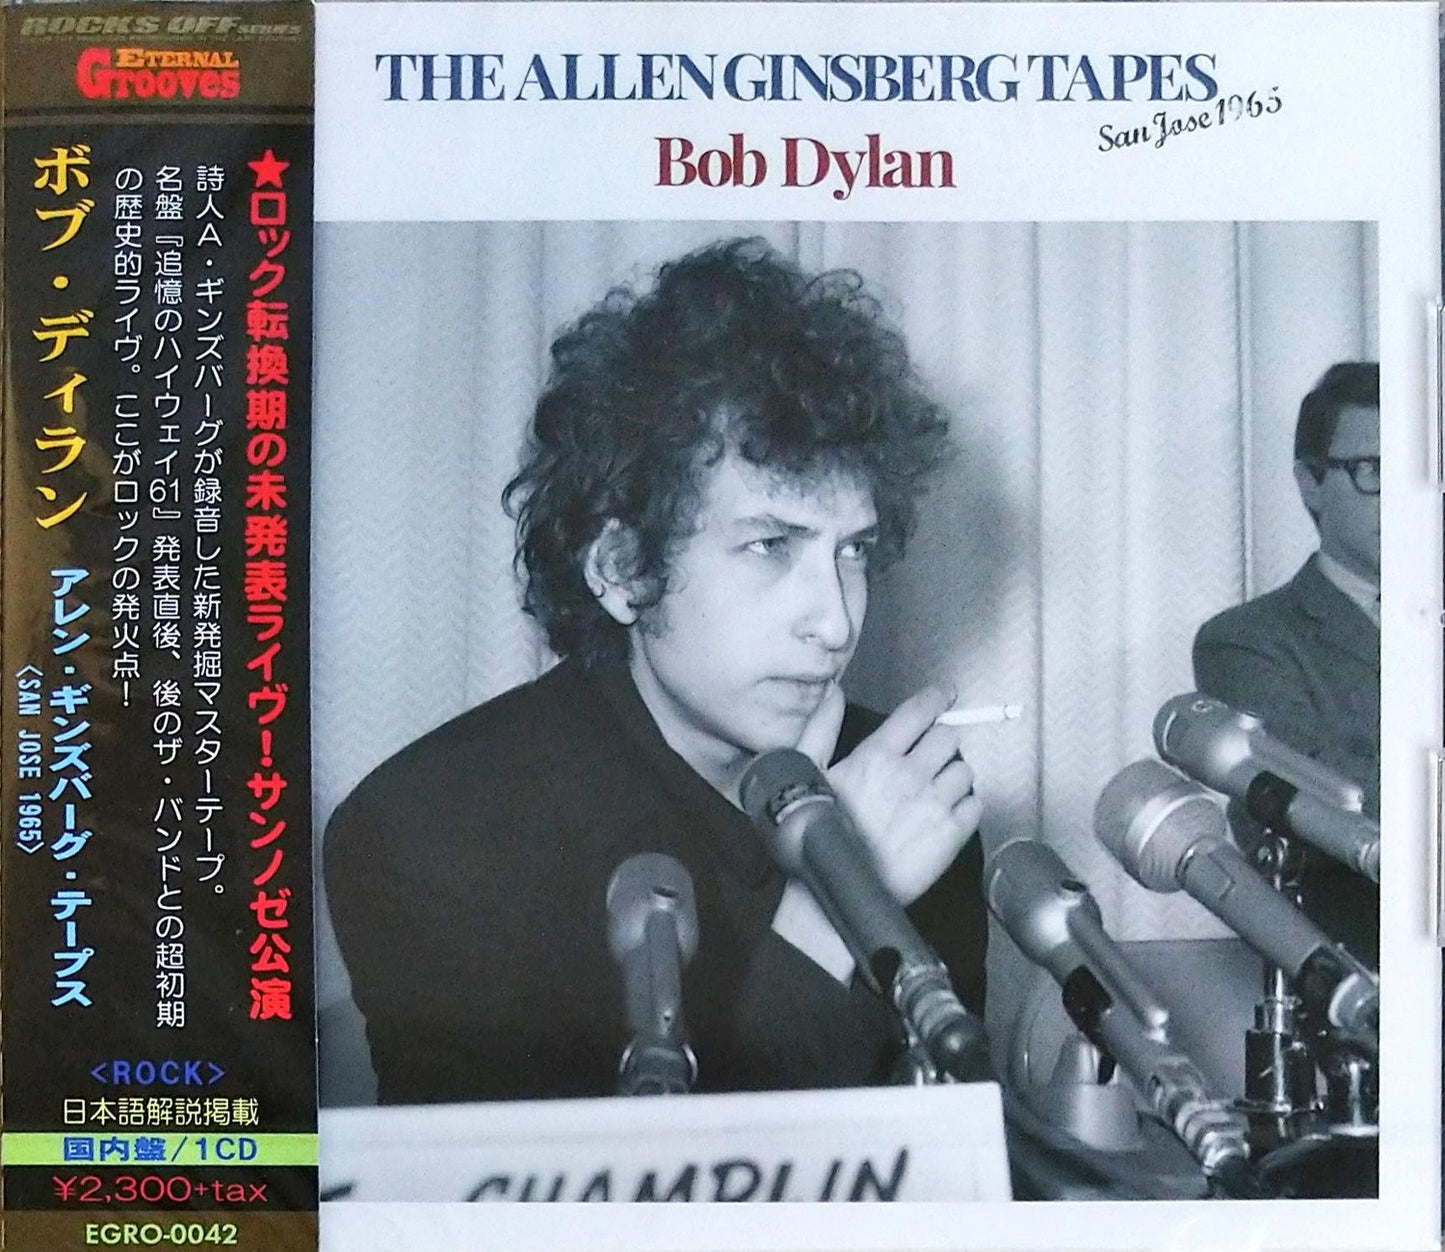 Bob Dylan - The Allen Ginsberg Tapes <San Jose 1965> - Japan CD